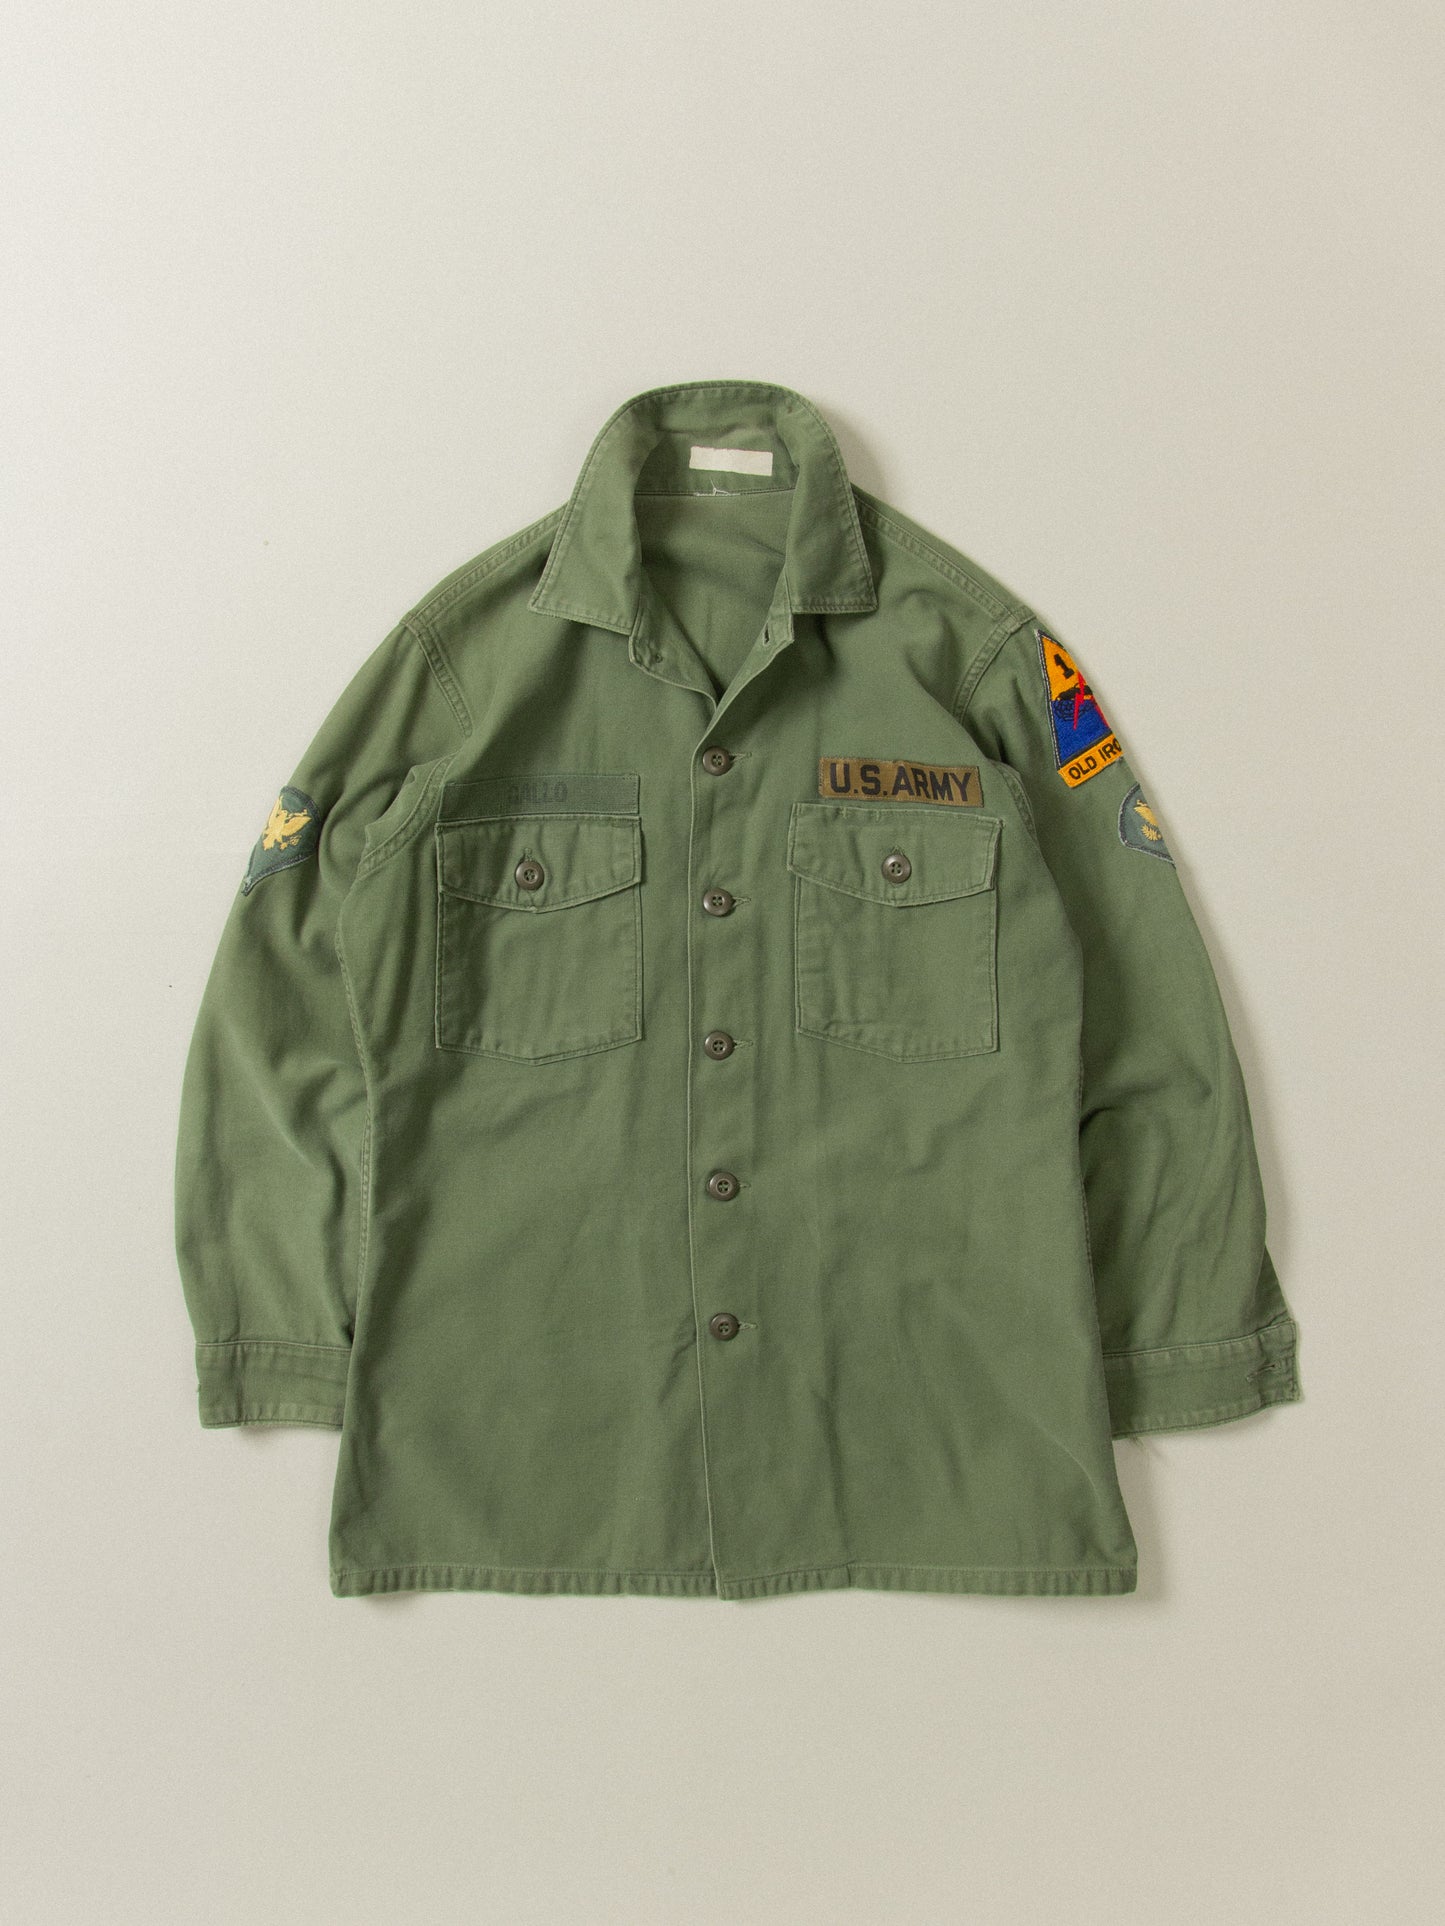 Vtg 60s US Army OG-107 Fatigue Shirt (S)